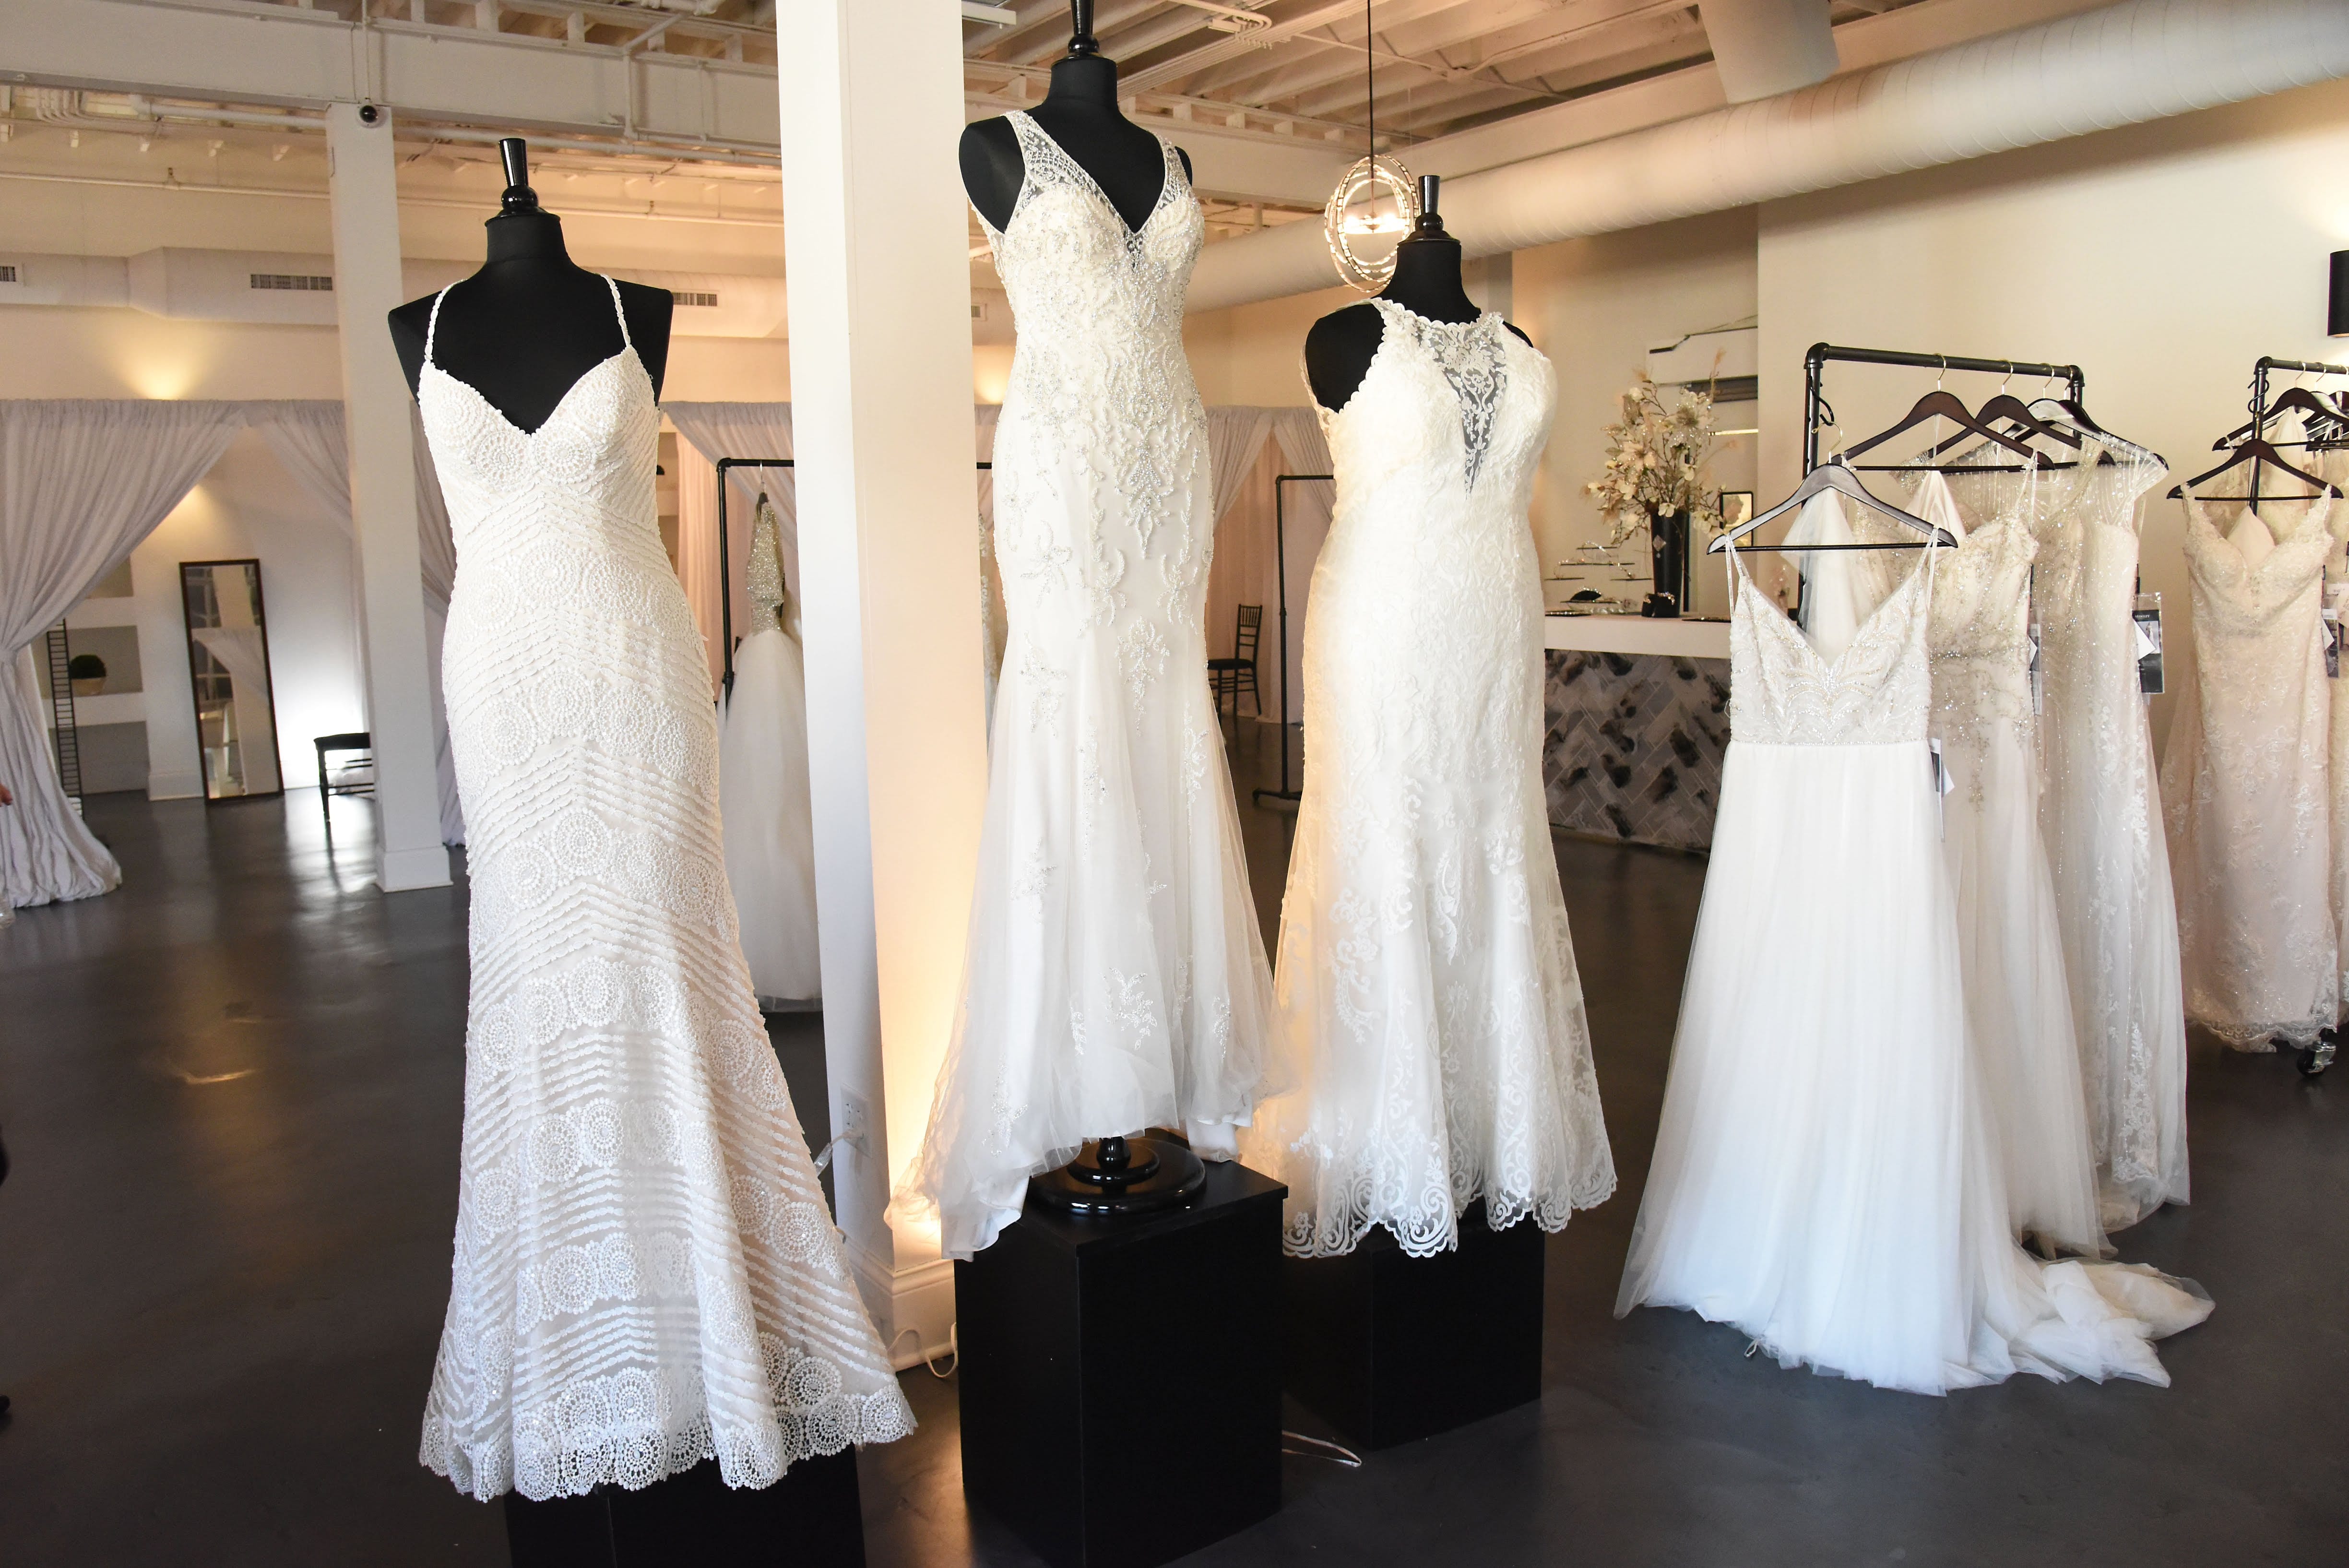 Maggie Sottero Wedding Dresses on Mannequins to Help Brides Find a Specific Wedding Dress Near Them